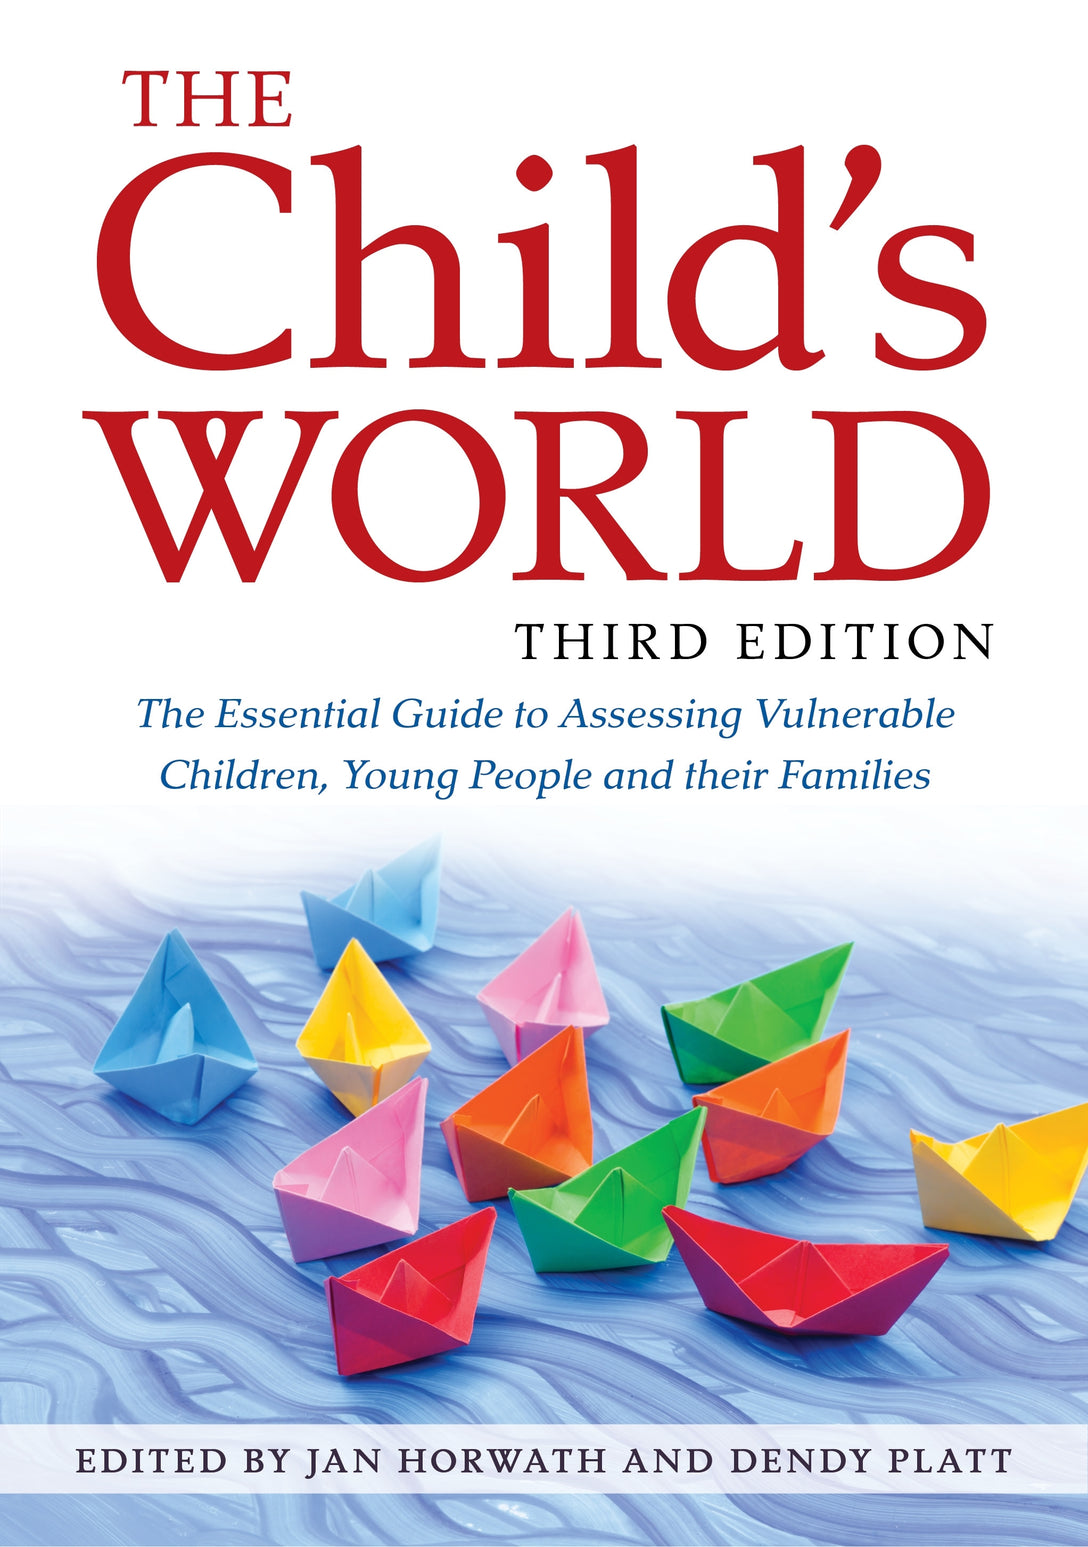 The Child's World, Third Edition by No Author Listed, Jan Horwath, Dendy Platt